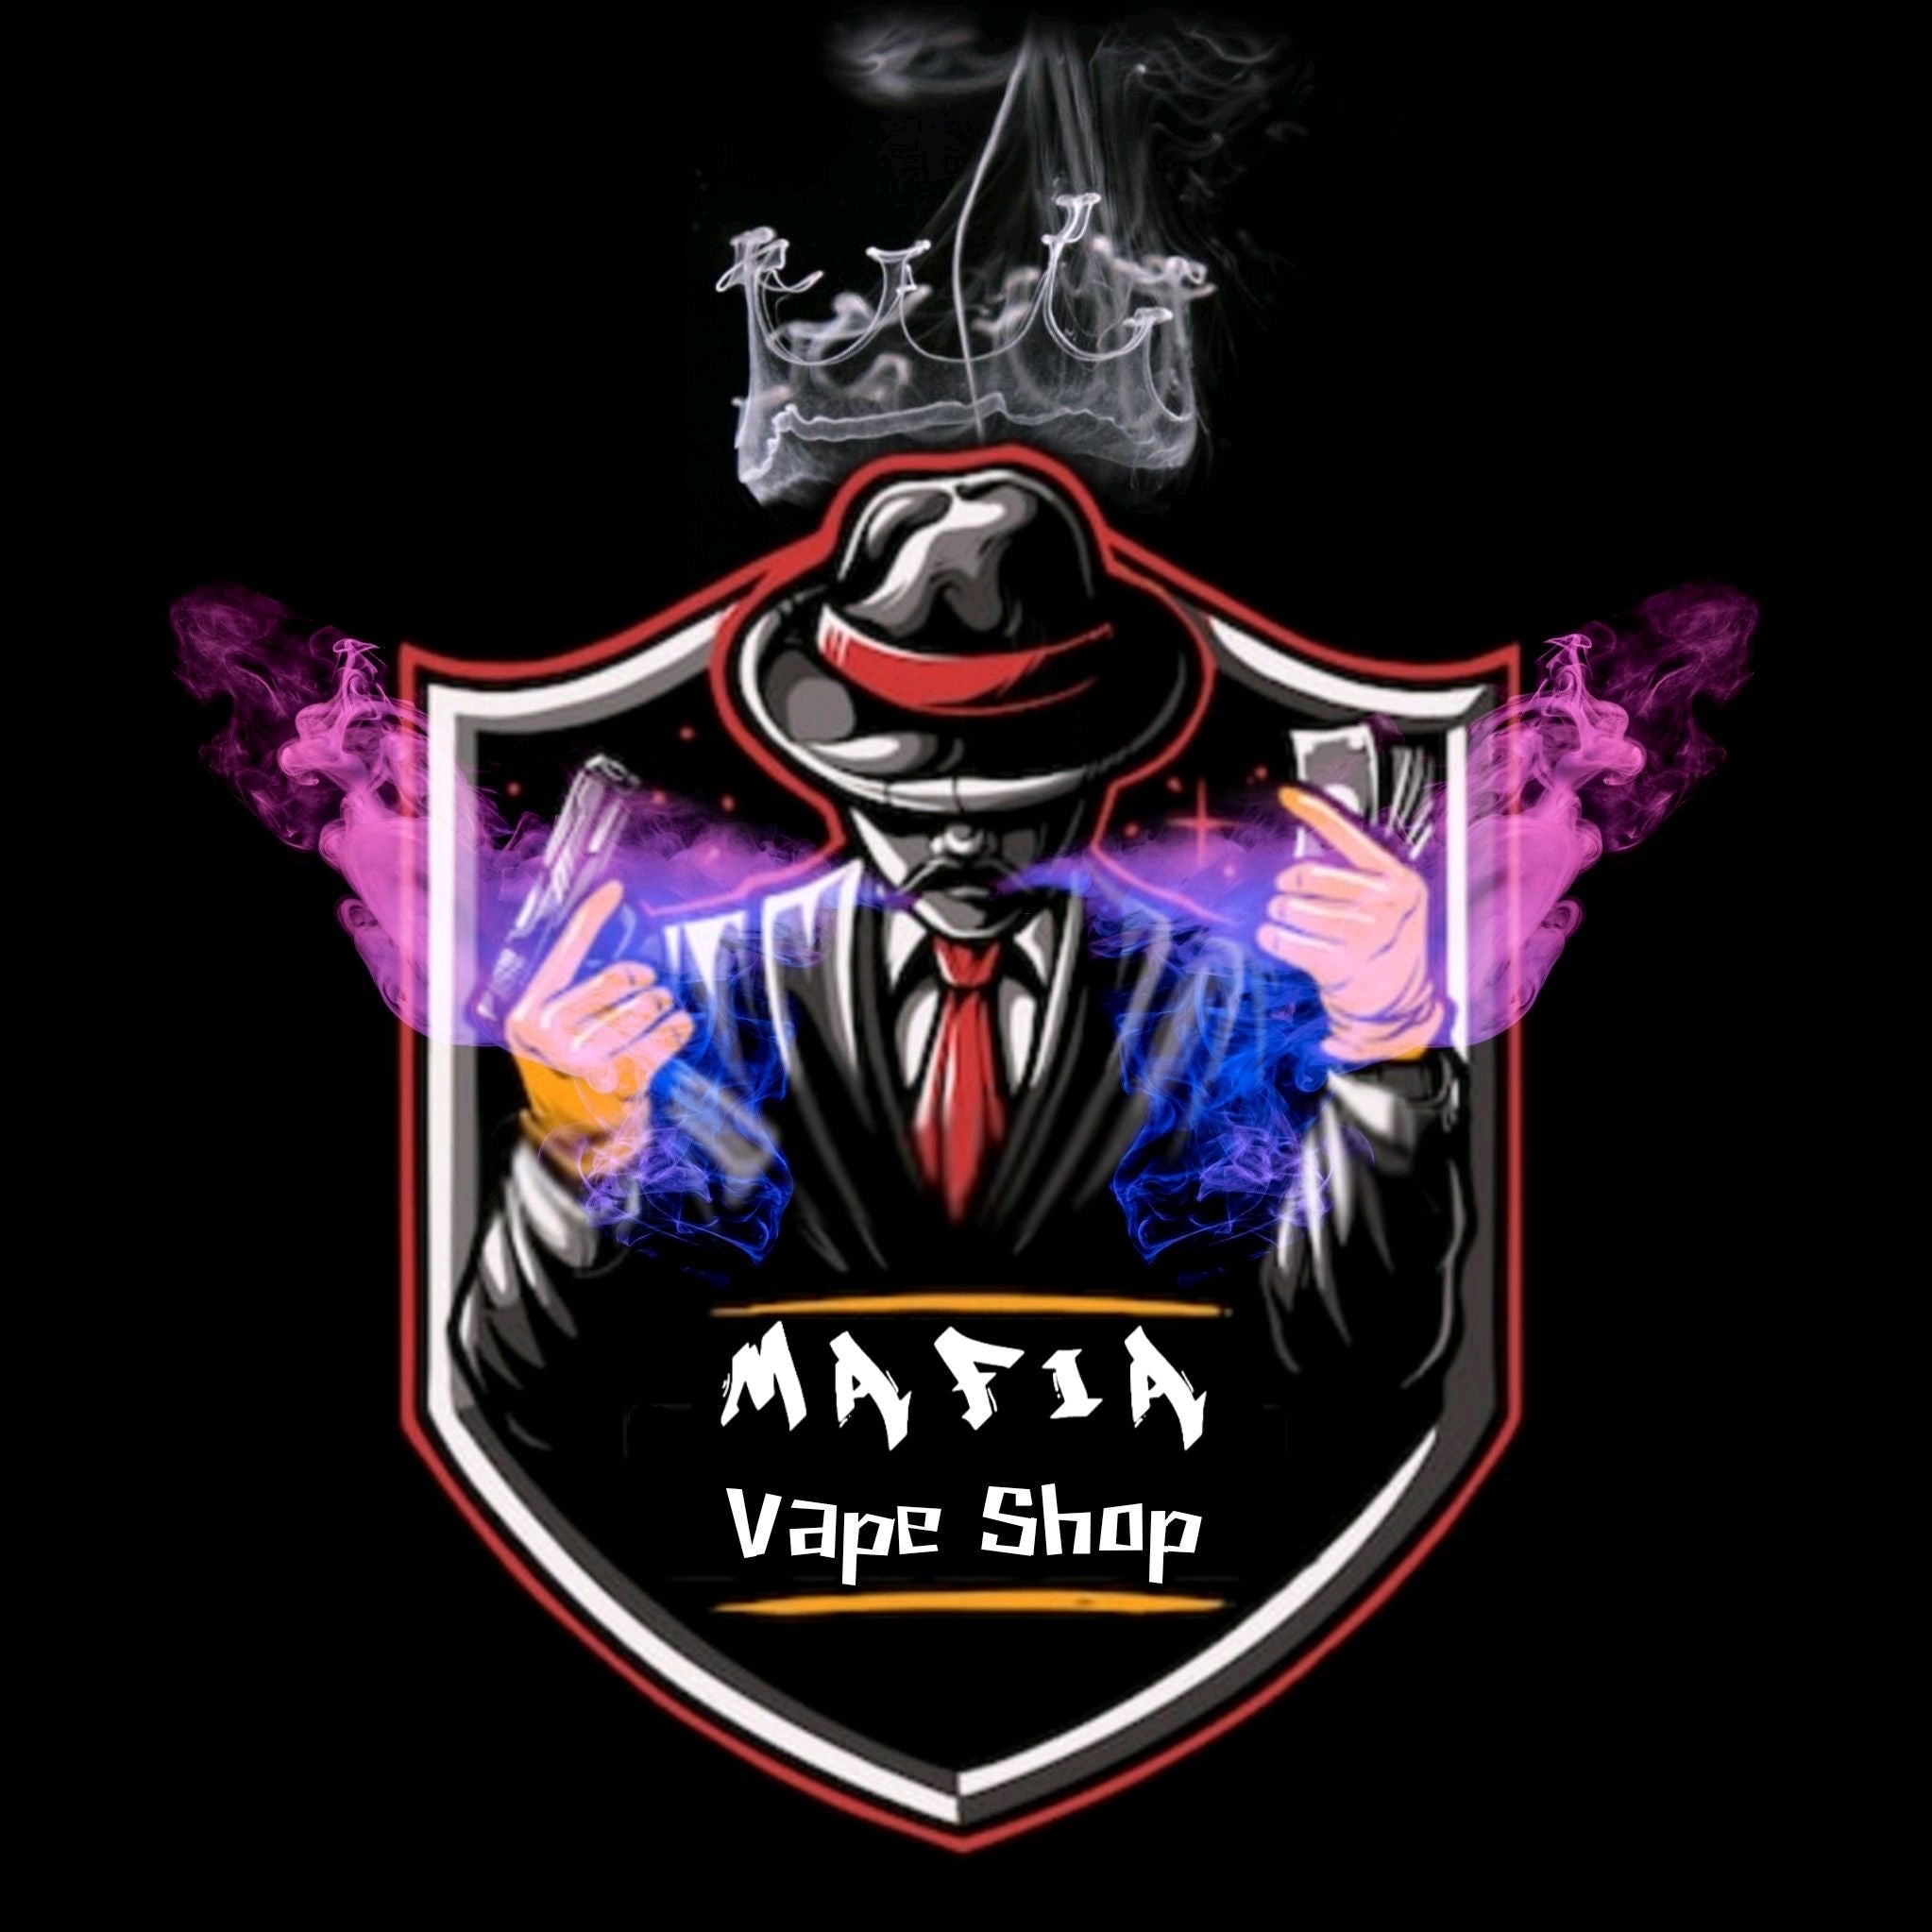 www.mafiavapeshop.com